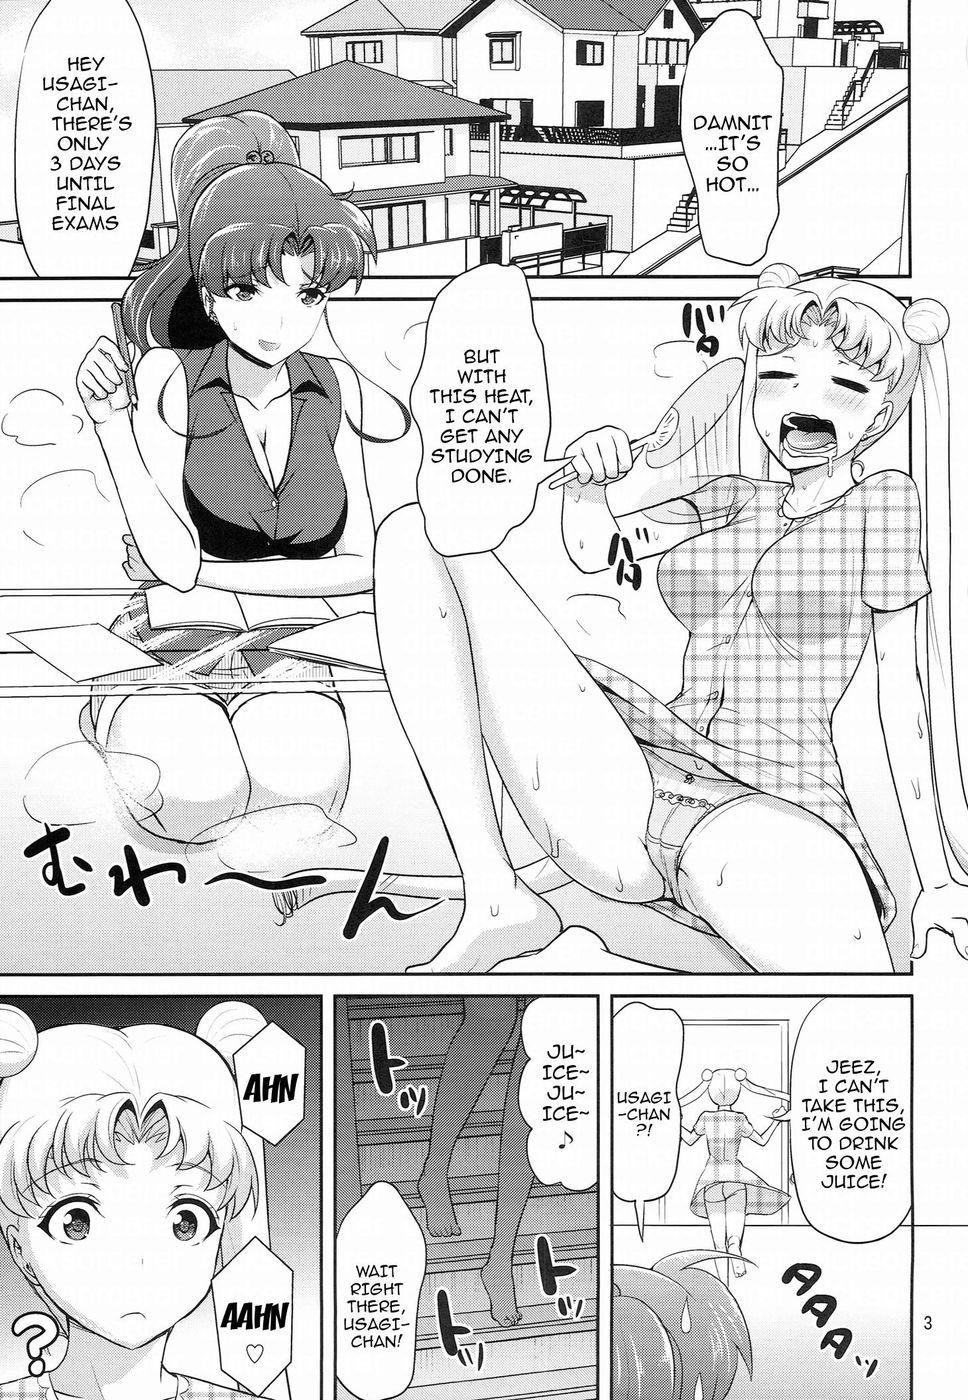 Friends MOON&JUPITER FREAK - Sailor moon Body - Page 2